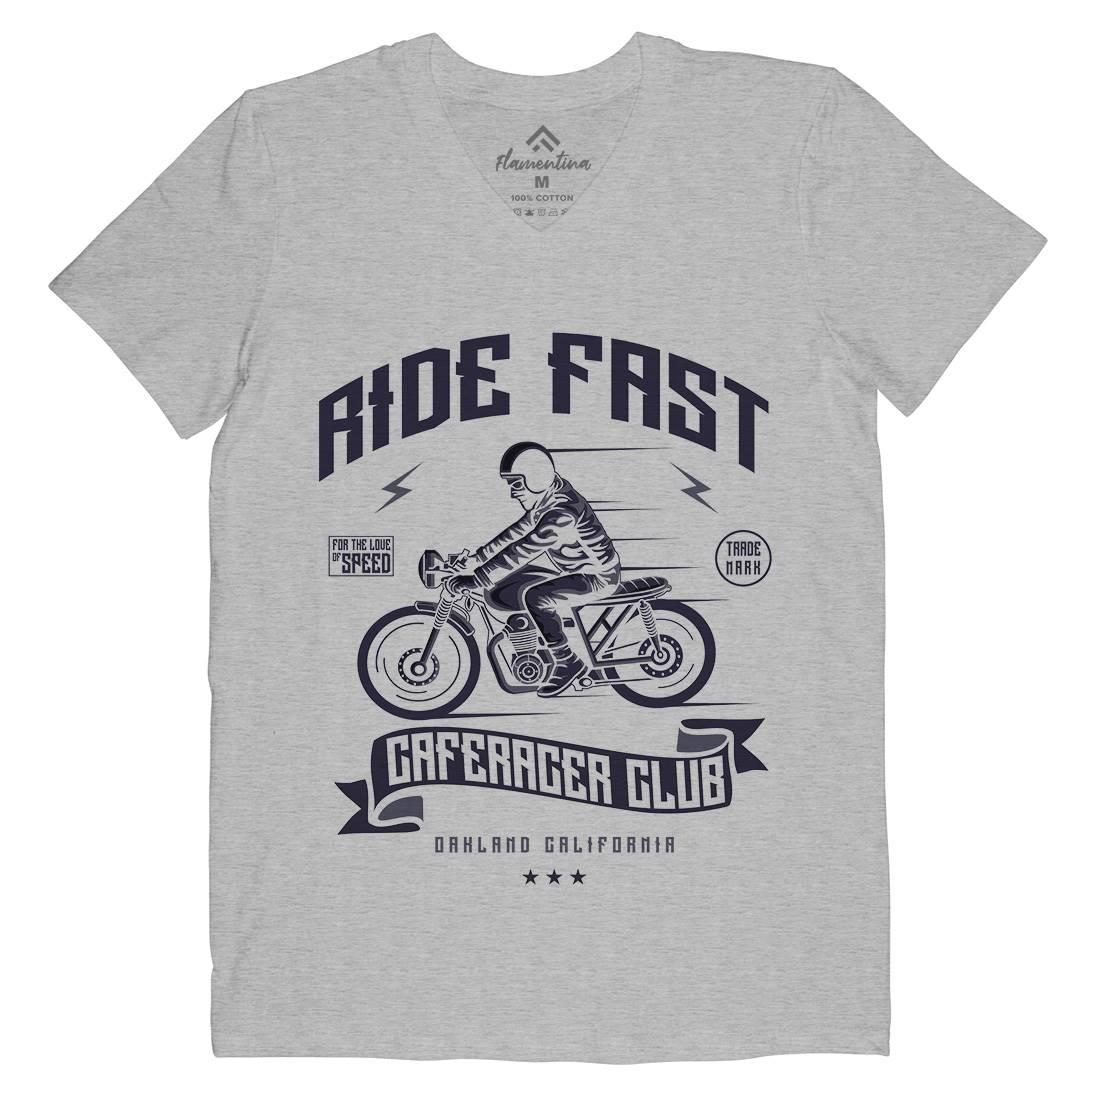 Ride Fast Mens V-Neck T-Shirt Motorcycles A117